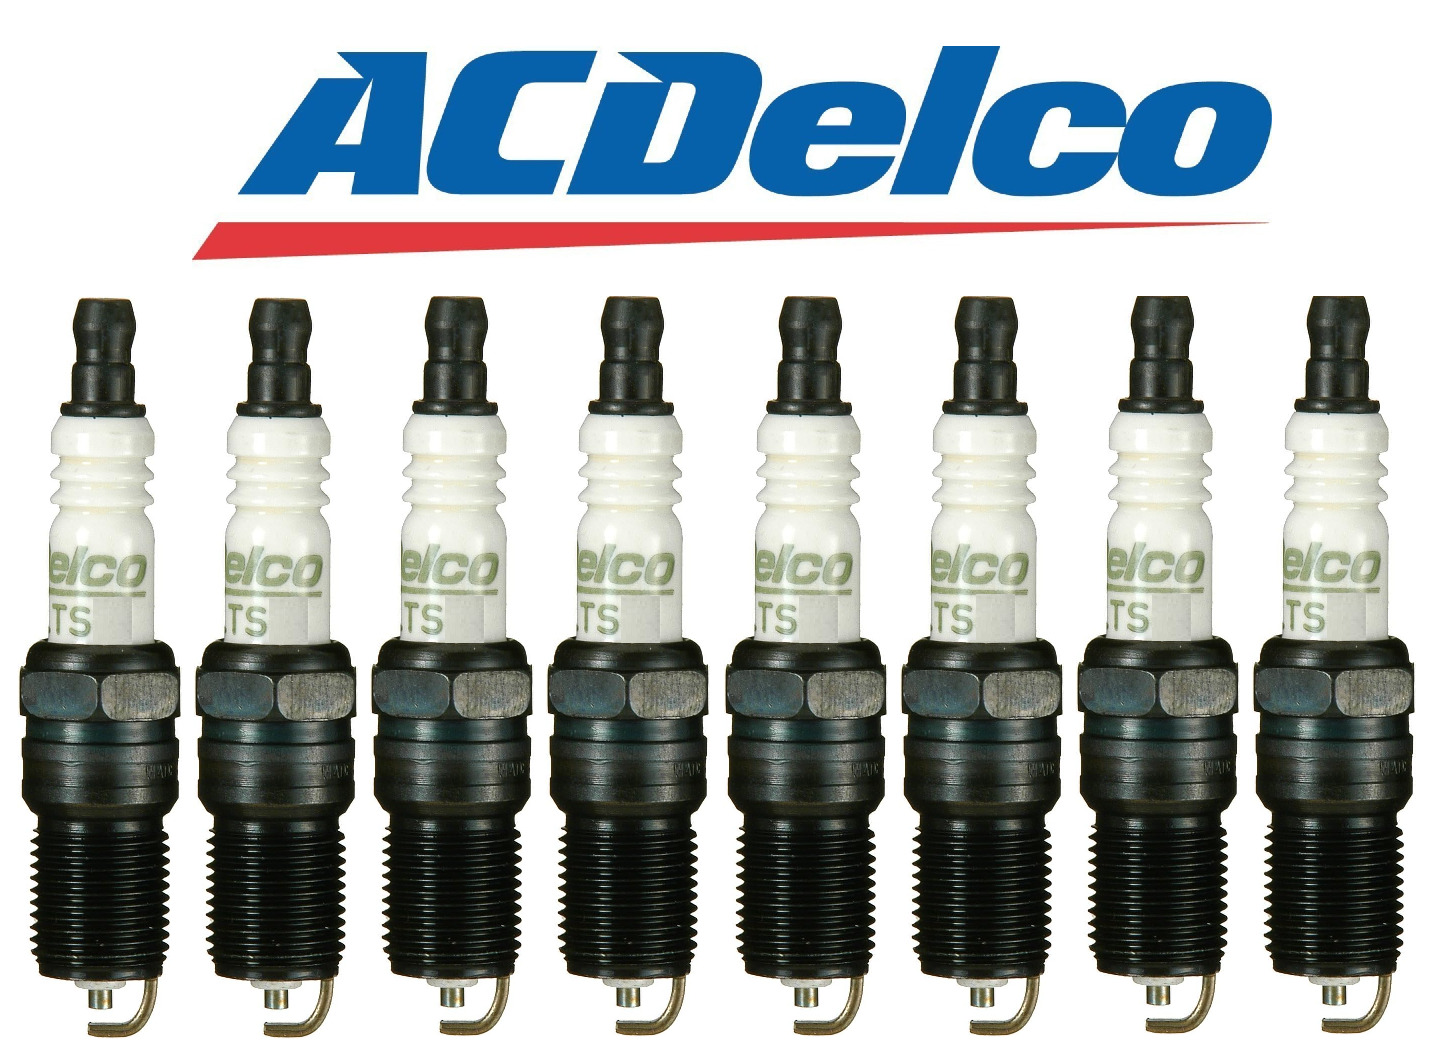 ACDELCO Spark Plugs (Set of 8) 1999-2013 for Chevrolet Silverado 1500 5.3L